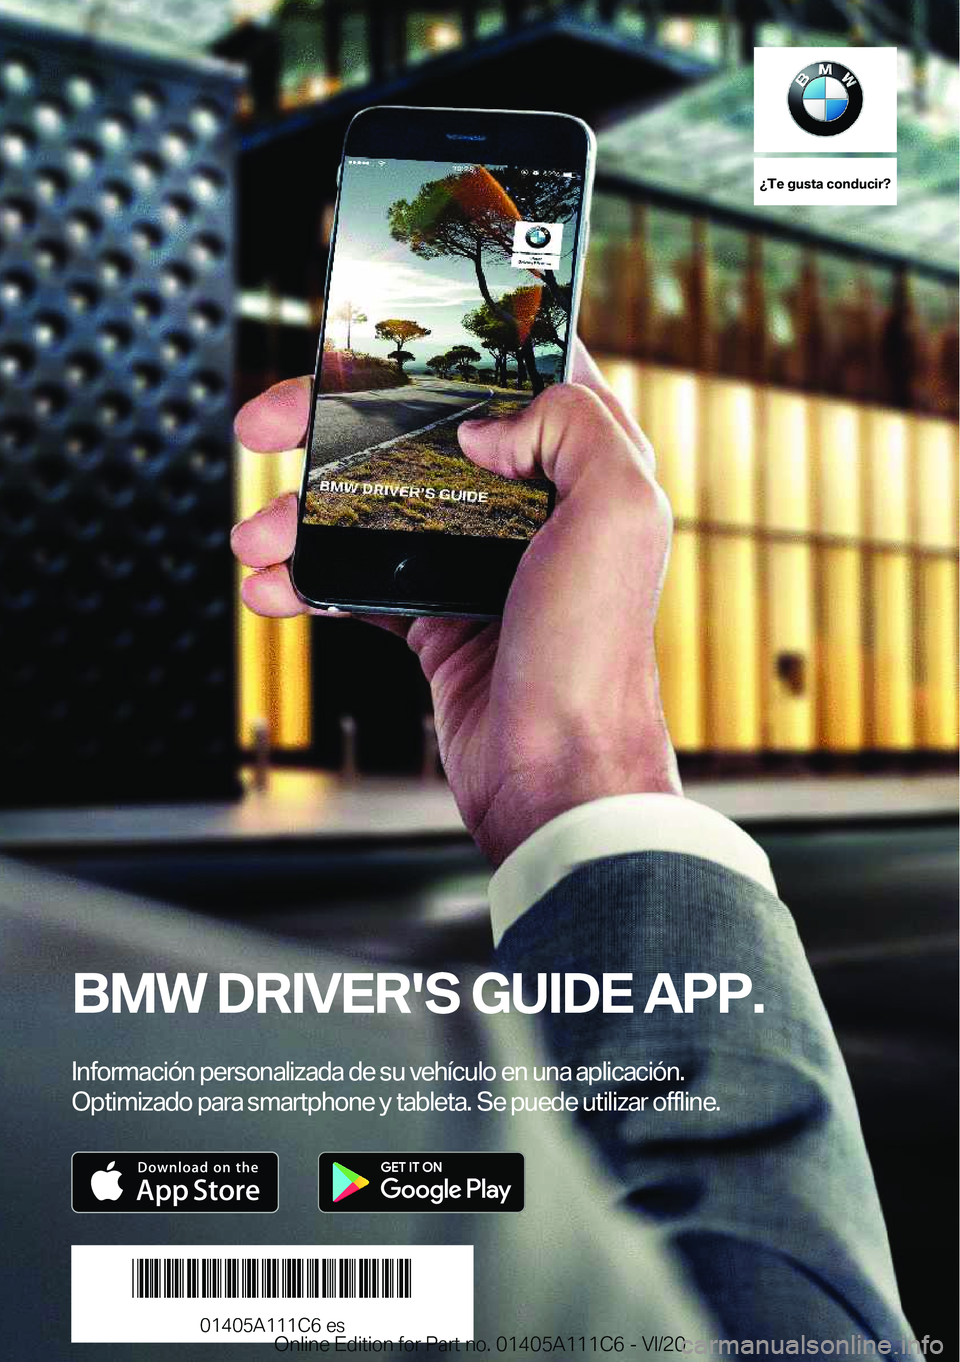 BMW 3 SERIES SEDAN PLUG-IN HYBRID 2021  Manuales de Empleo (in Spanish) ��T�e��g�u�s�t�a��c�o�n�d�u�c�i�r� 
�B�M�W��D�R�I�V�E�R�'�S��G�U�I�D�E��A�P�P�.�*�n�f�o�r�m�a�c�i�